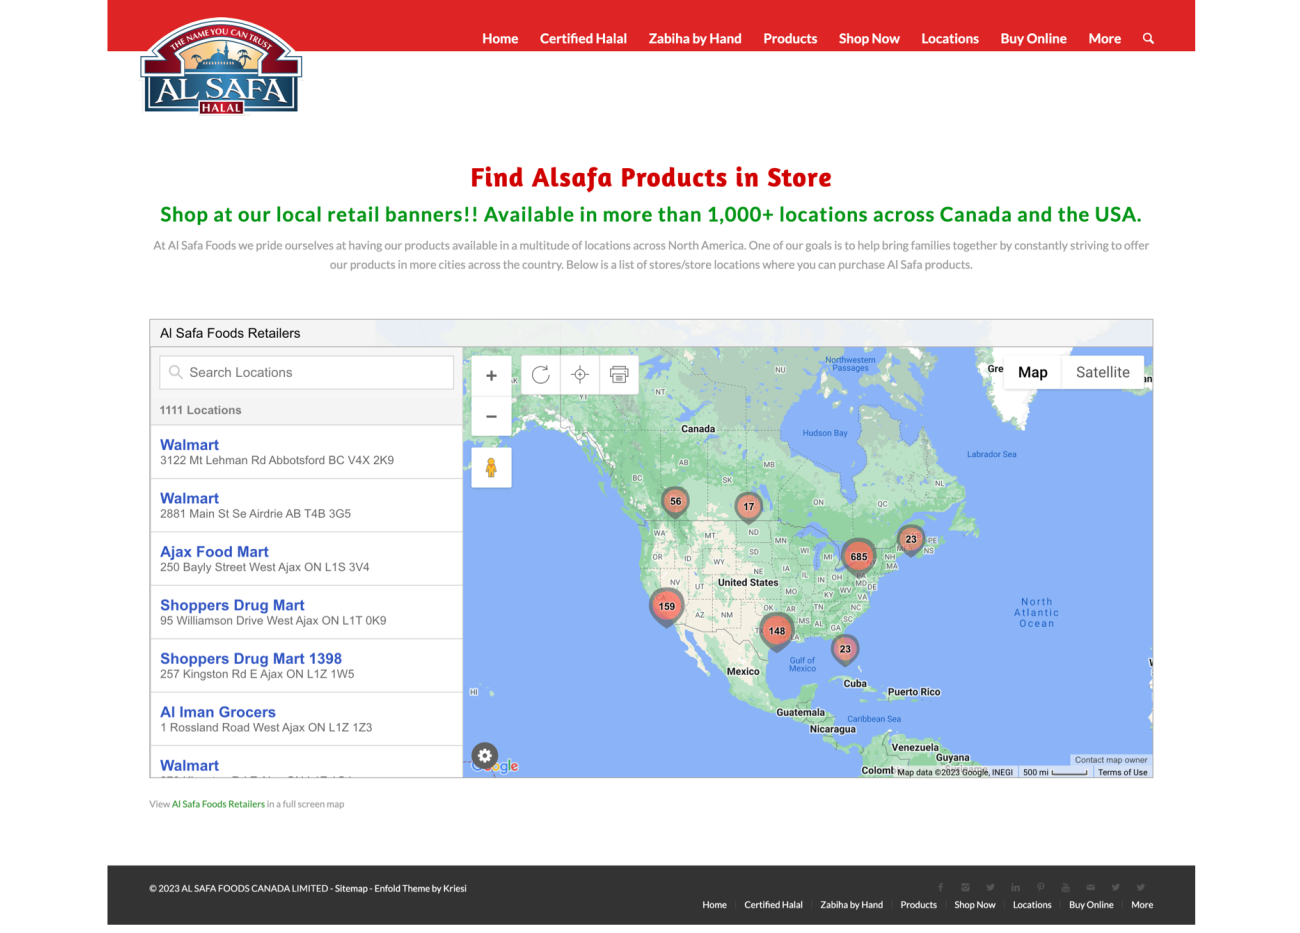 Screenshot of the Al Safa Foods website Locations page